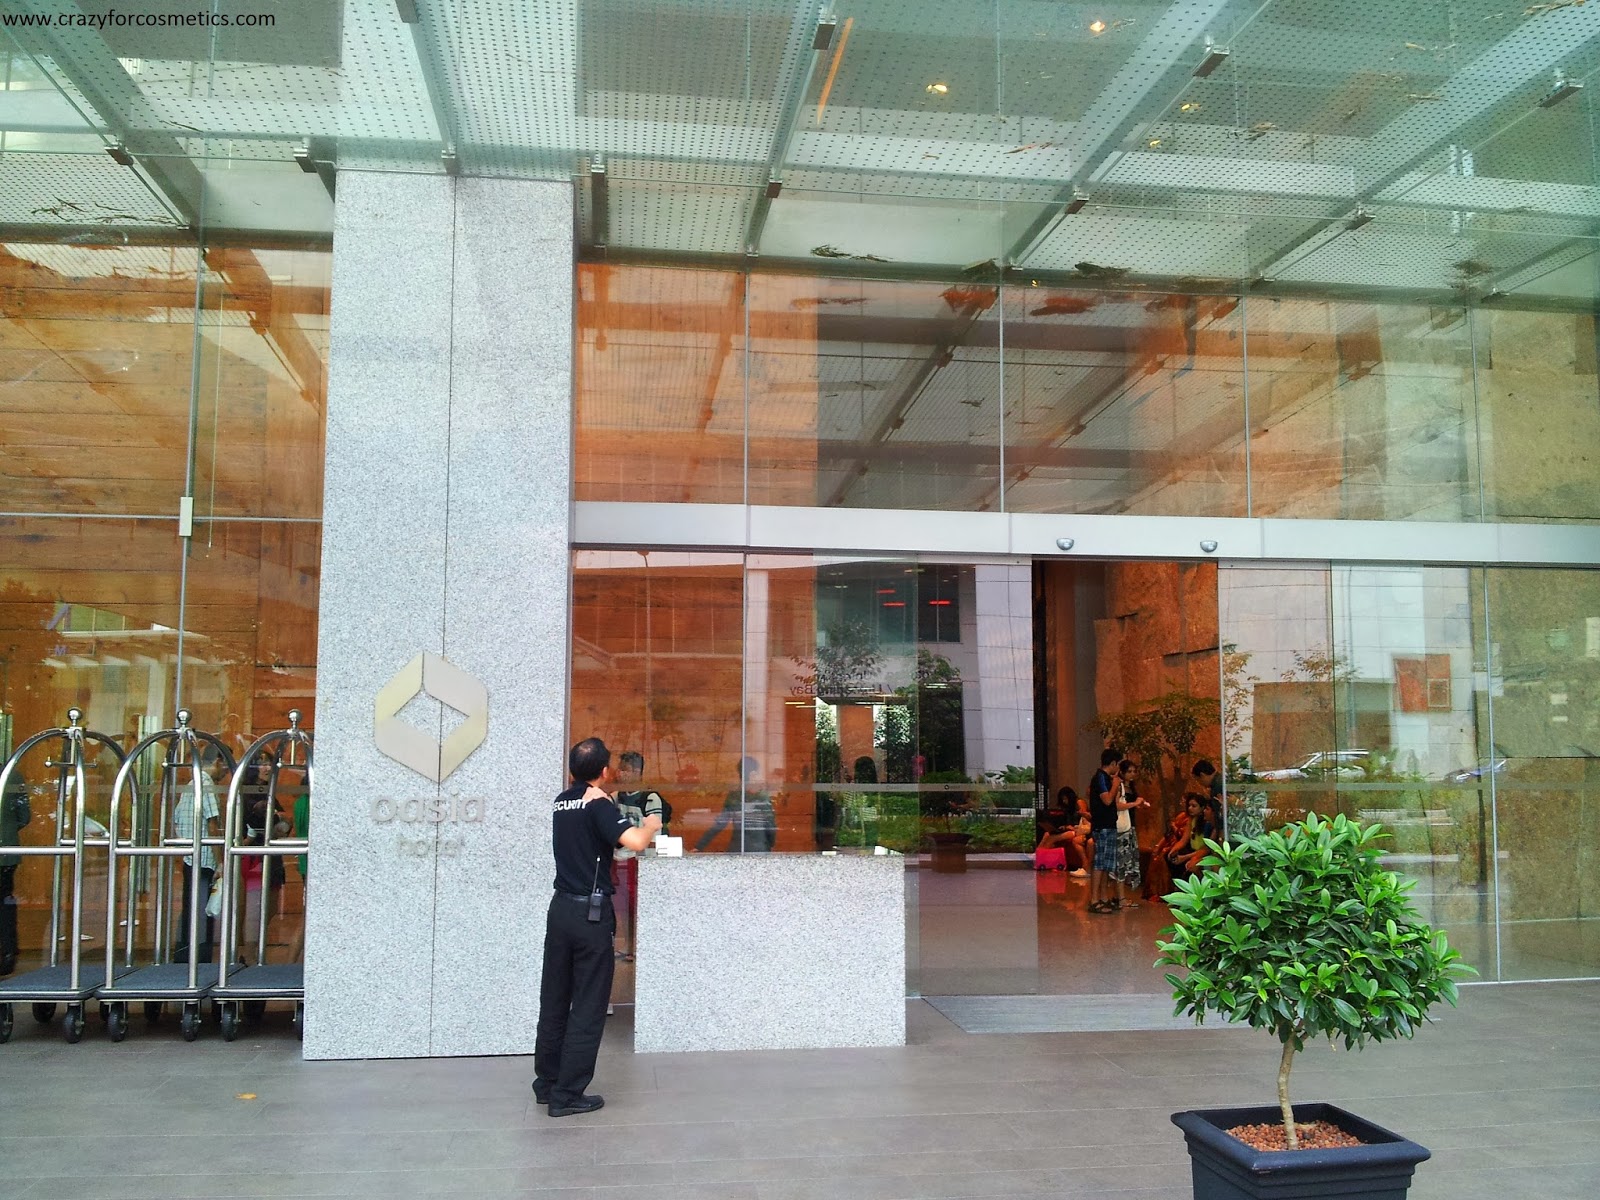 Oasia Hotel Singapore by Far East Hospitality